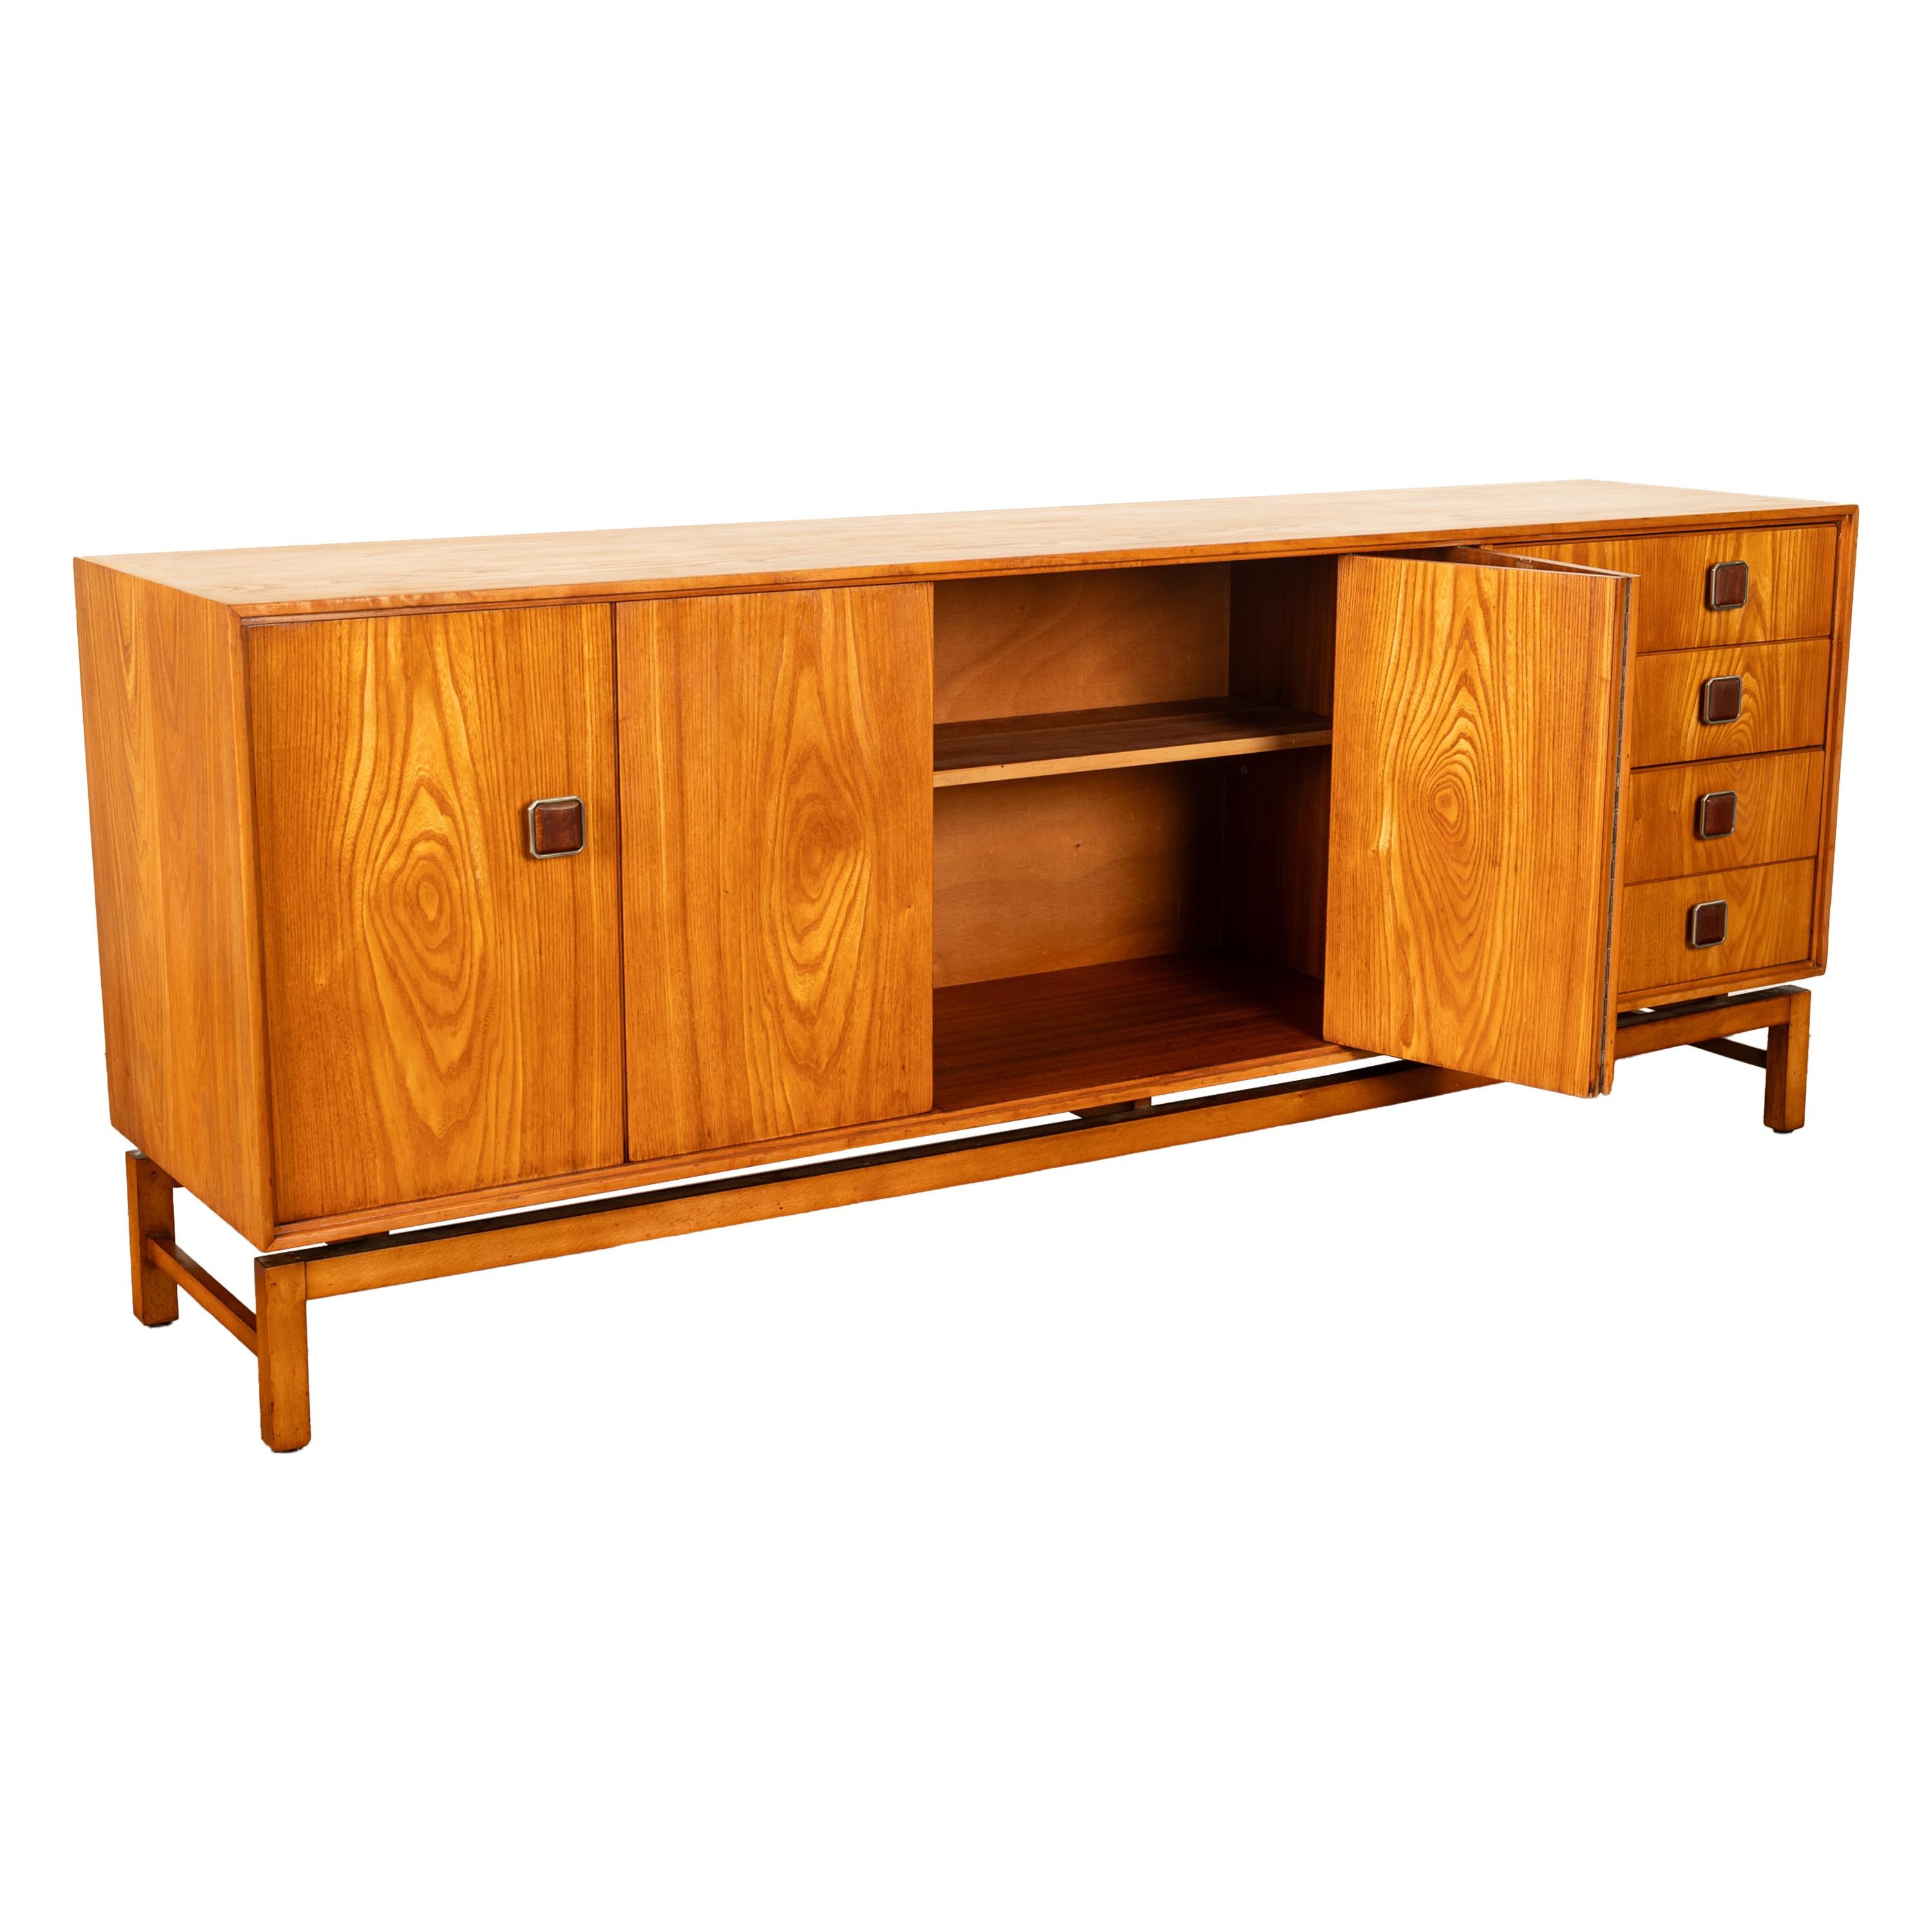 Original Danish Mid Century Modern Teak Credenza Sideboard Cabinet 6' Long 1960  4